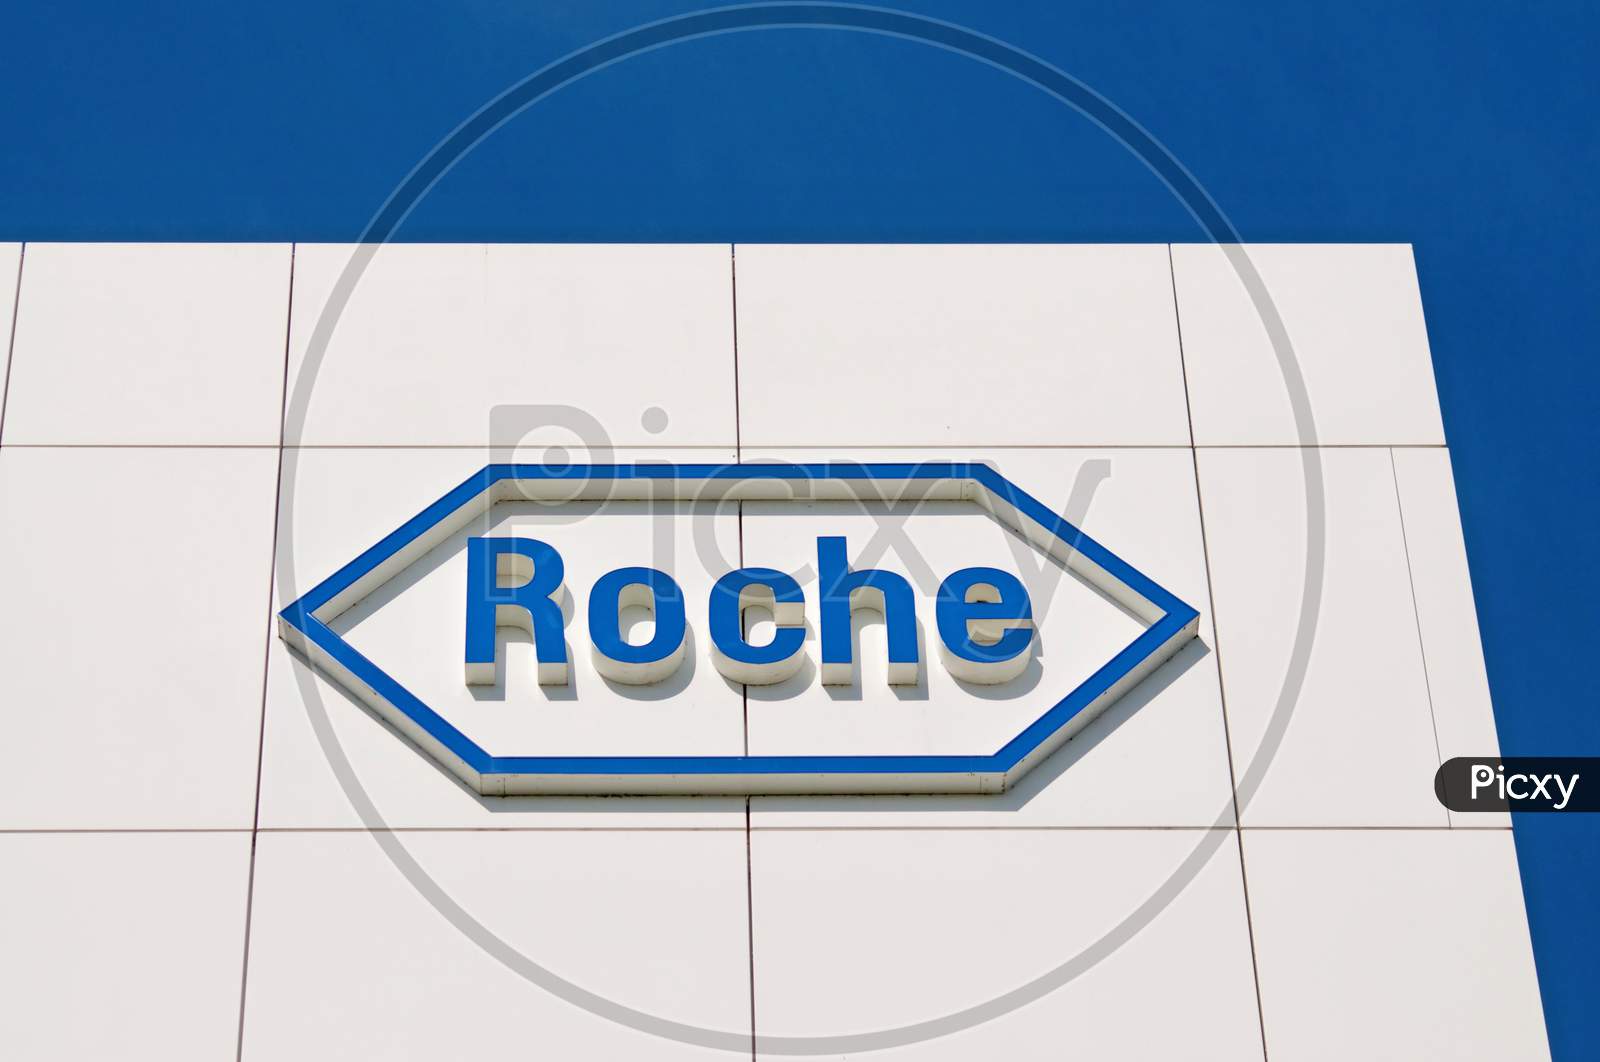 Roche Sign In Front At The Roche Diagnostics Campus In Rotkreuz, Switzerland